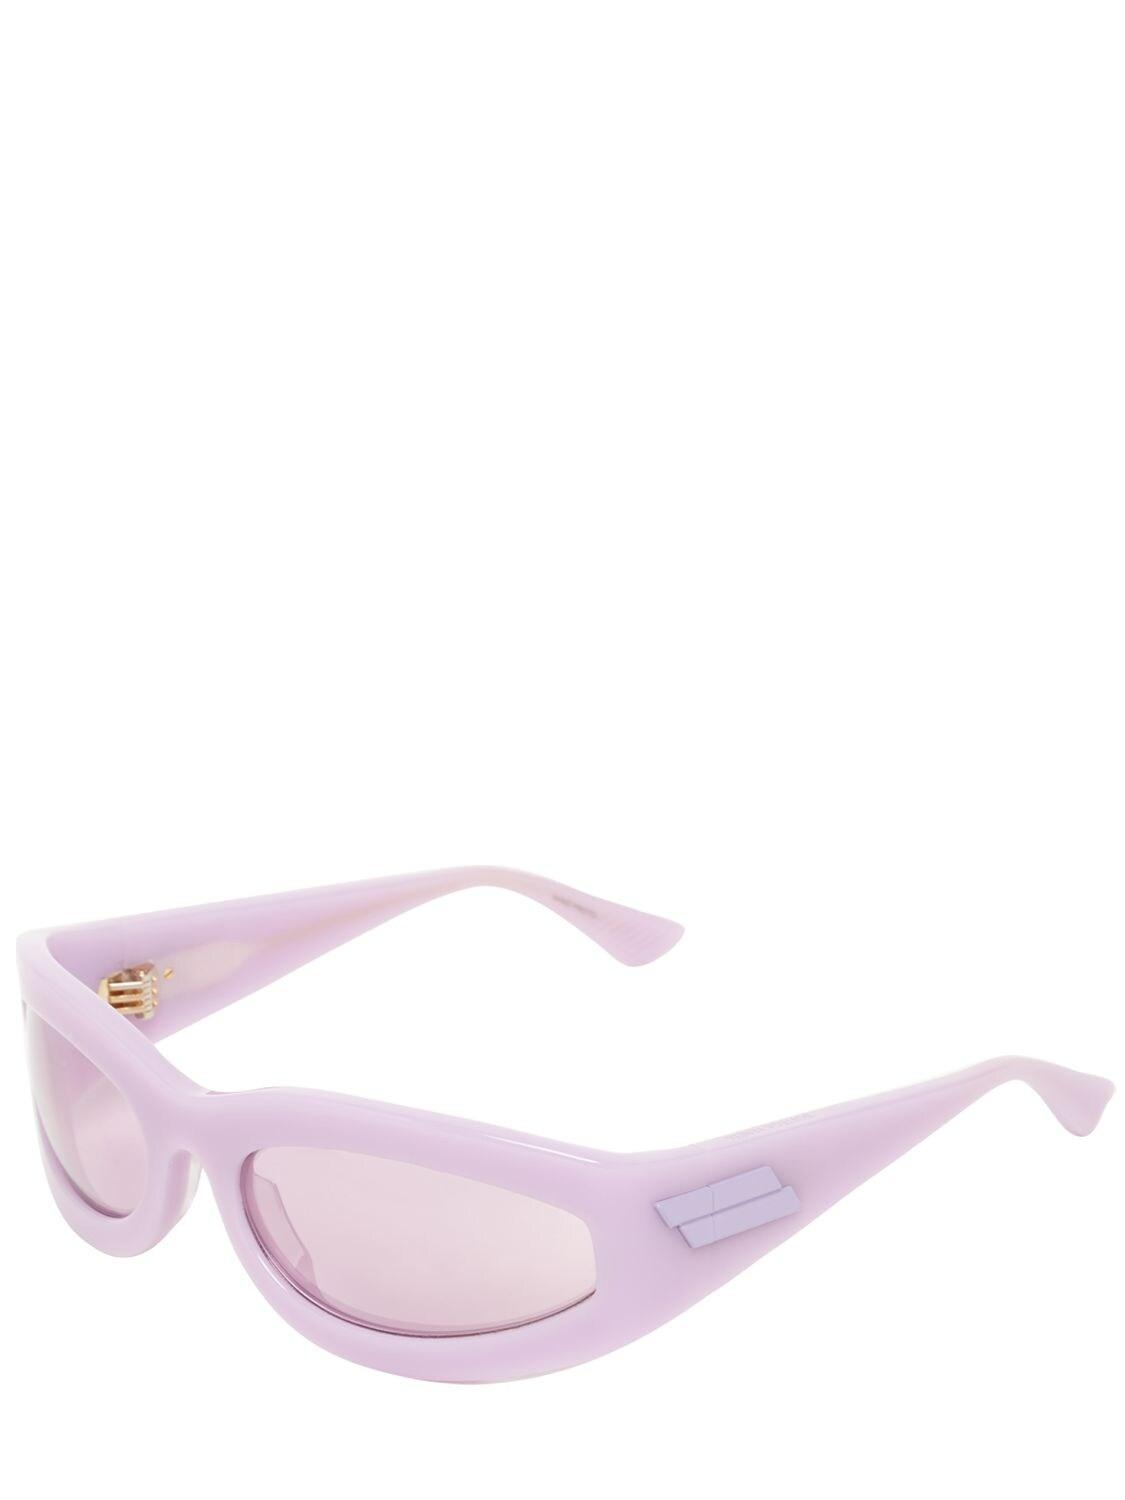 Bottega Veneta wrap around purple sunglasses